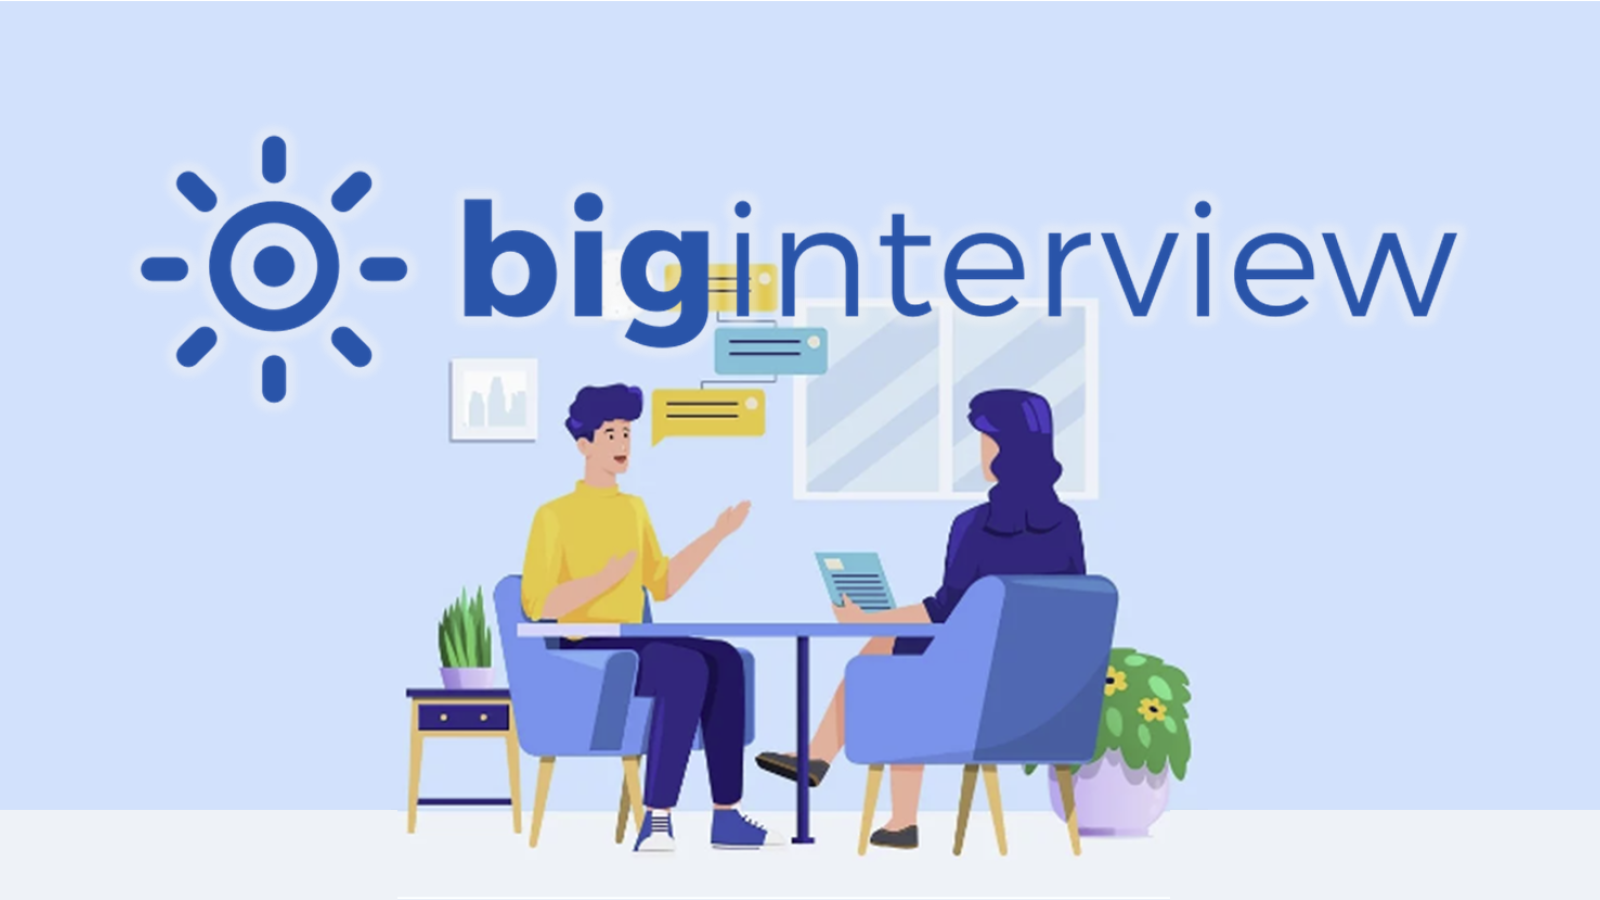 dsa_cdc_banner_students_big-interview